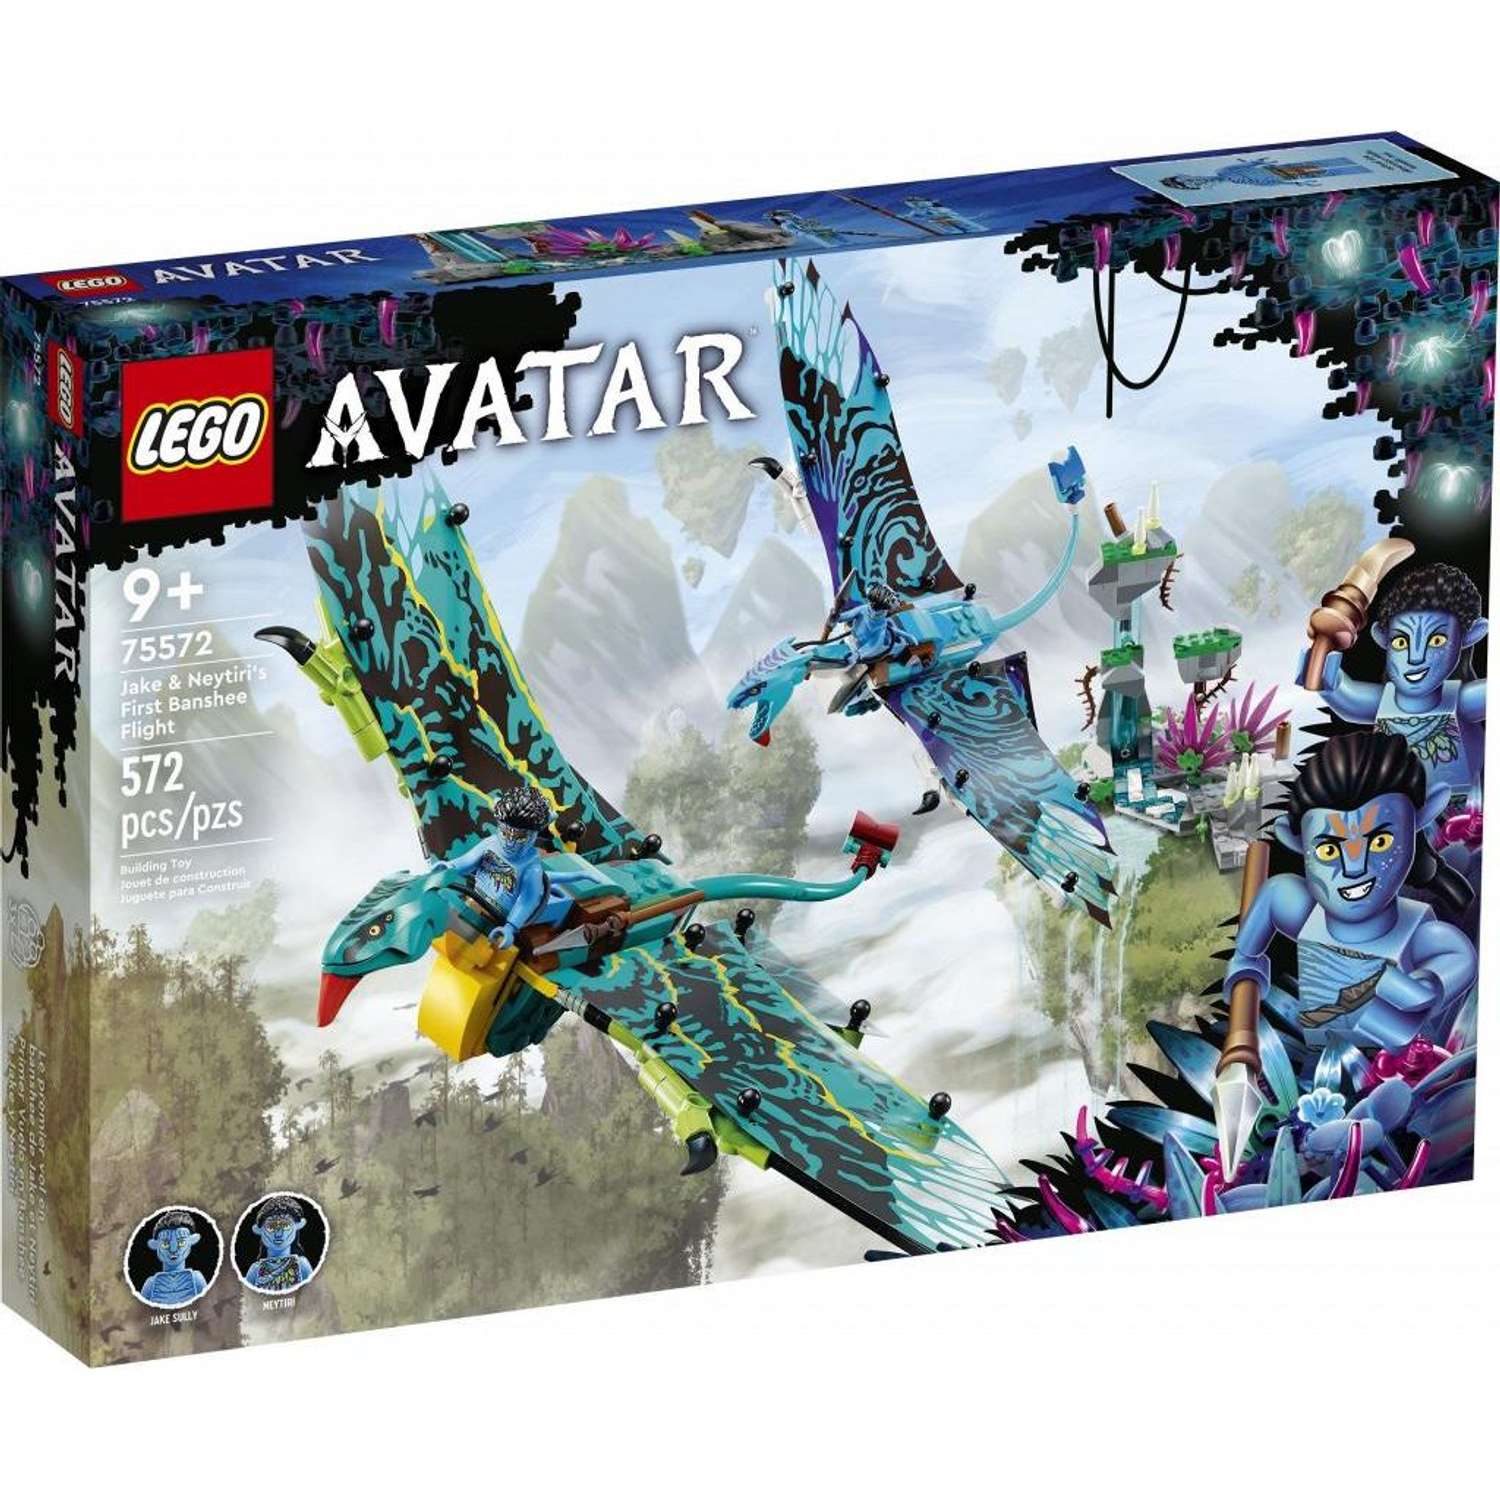 Конструктор LEGO Avatar Jake and Neytiri’s First Banshee Flight 75572 - фото 2